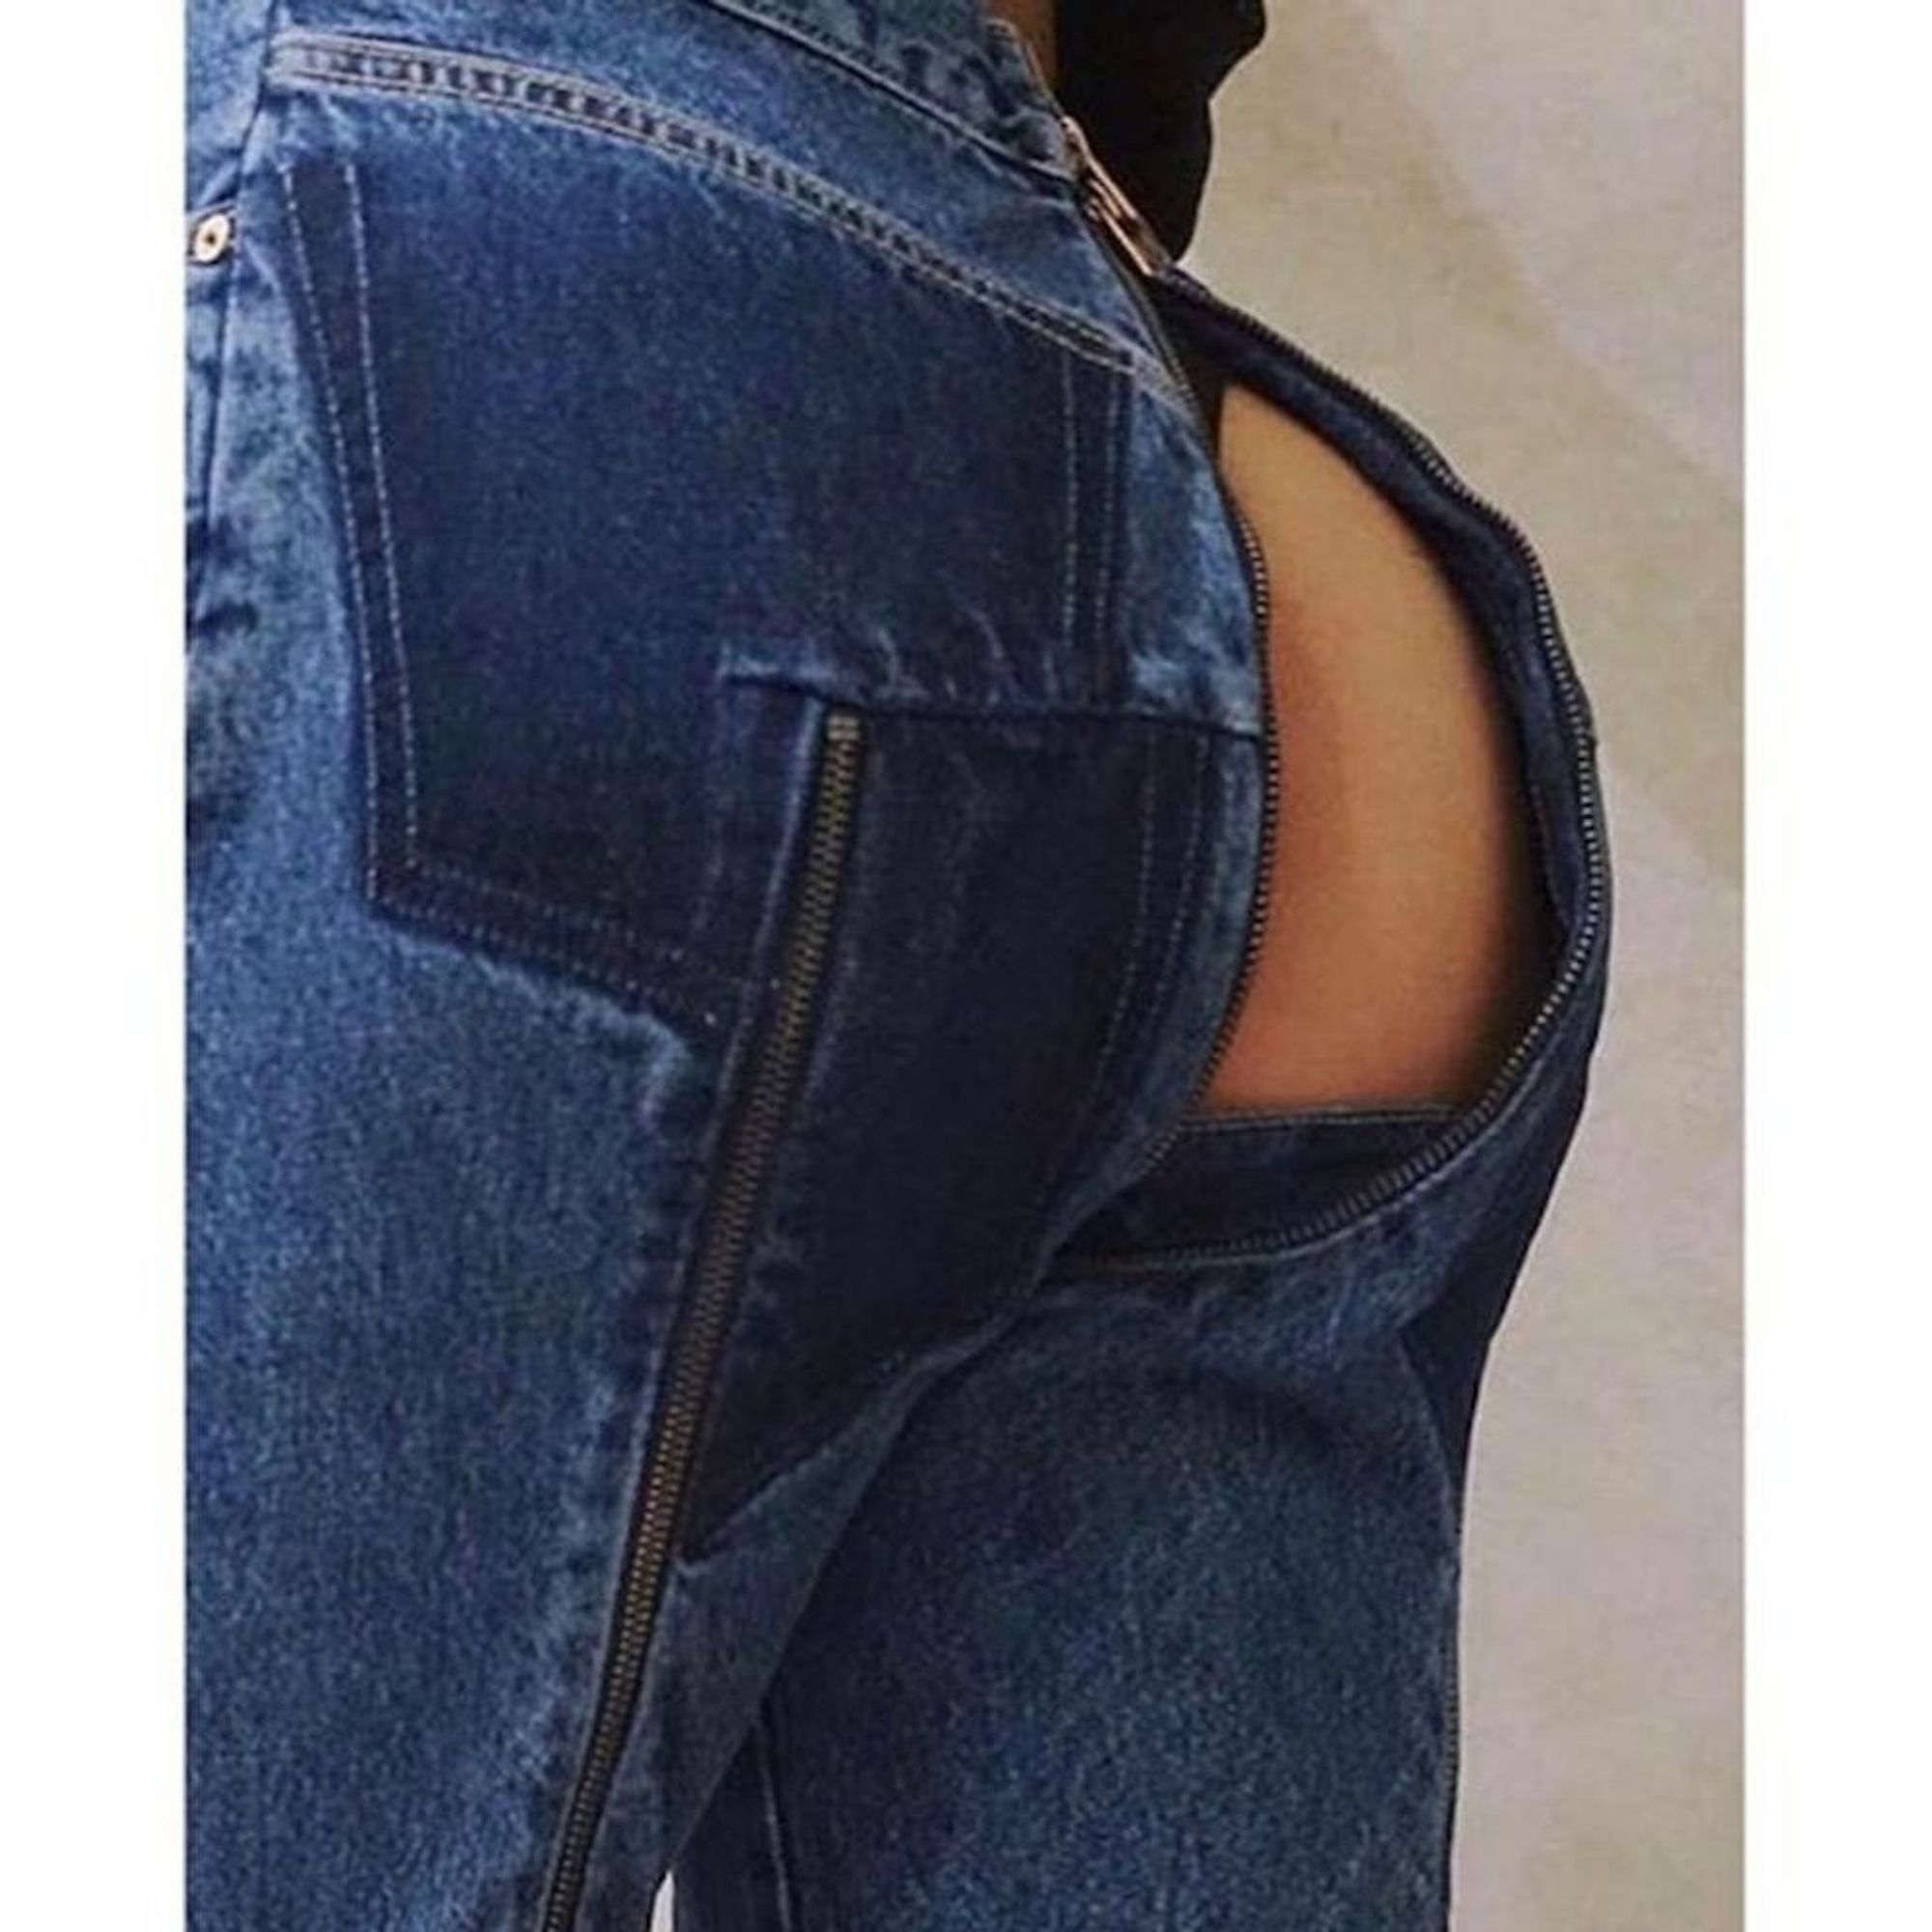 Bare-Butt Jeans Are the Latest Crazy Denim Trend - Brit + Co